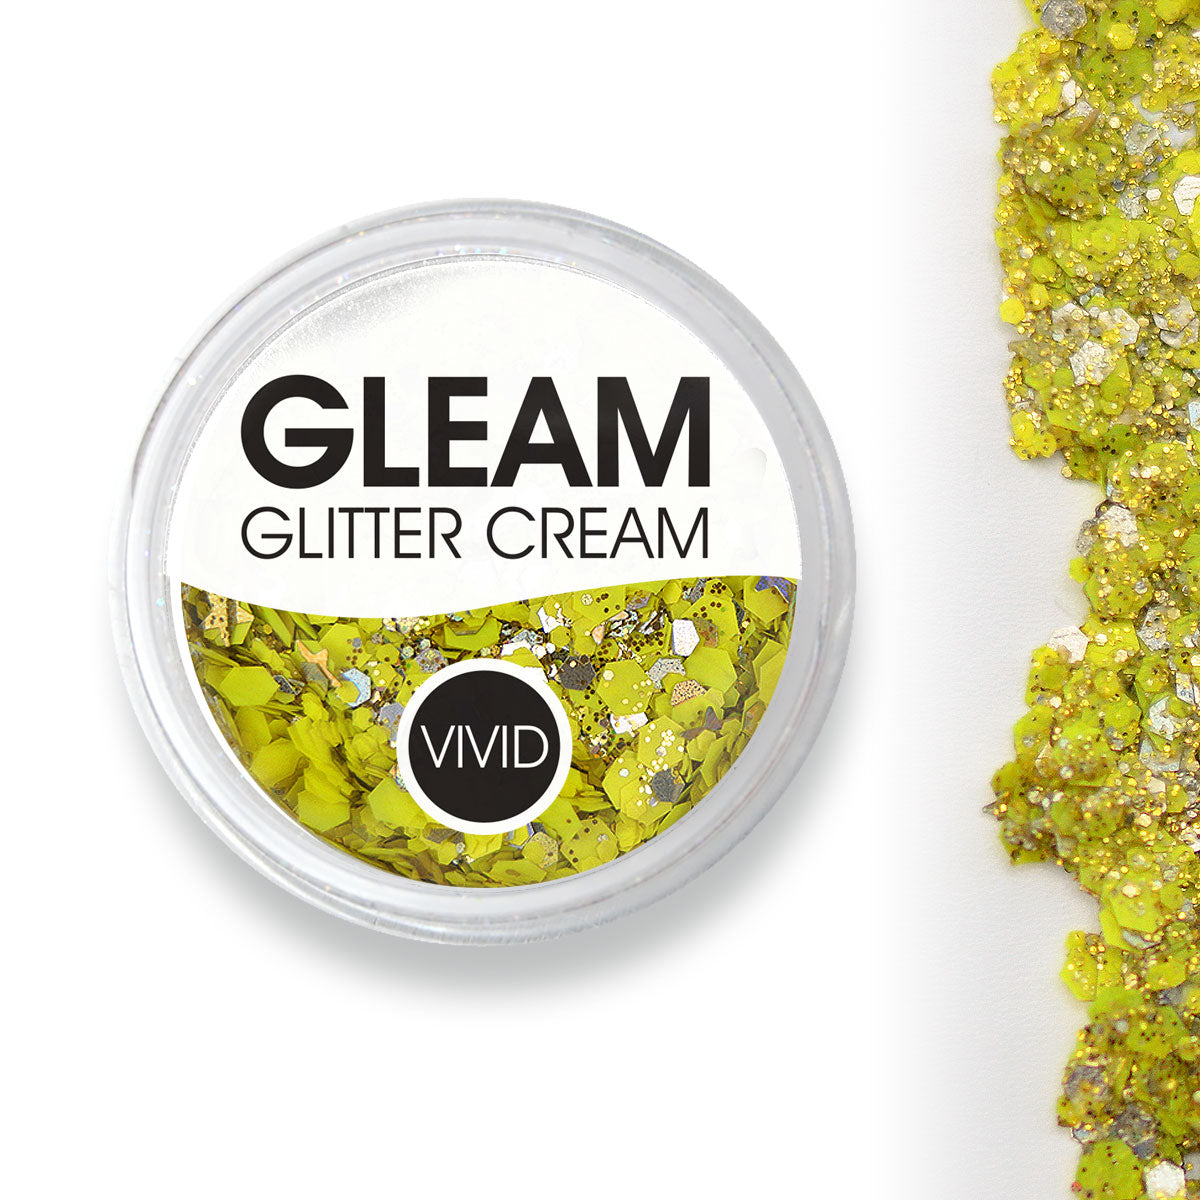 Pineapple - Gleam Chunky Glitter Cream (Supports Healing Smiles Foundation)